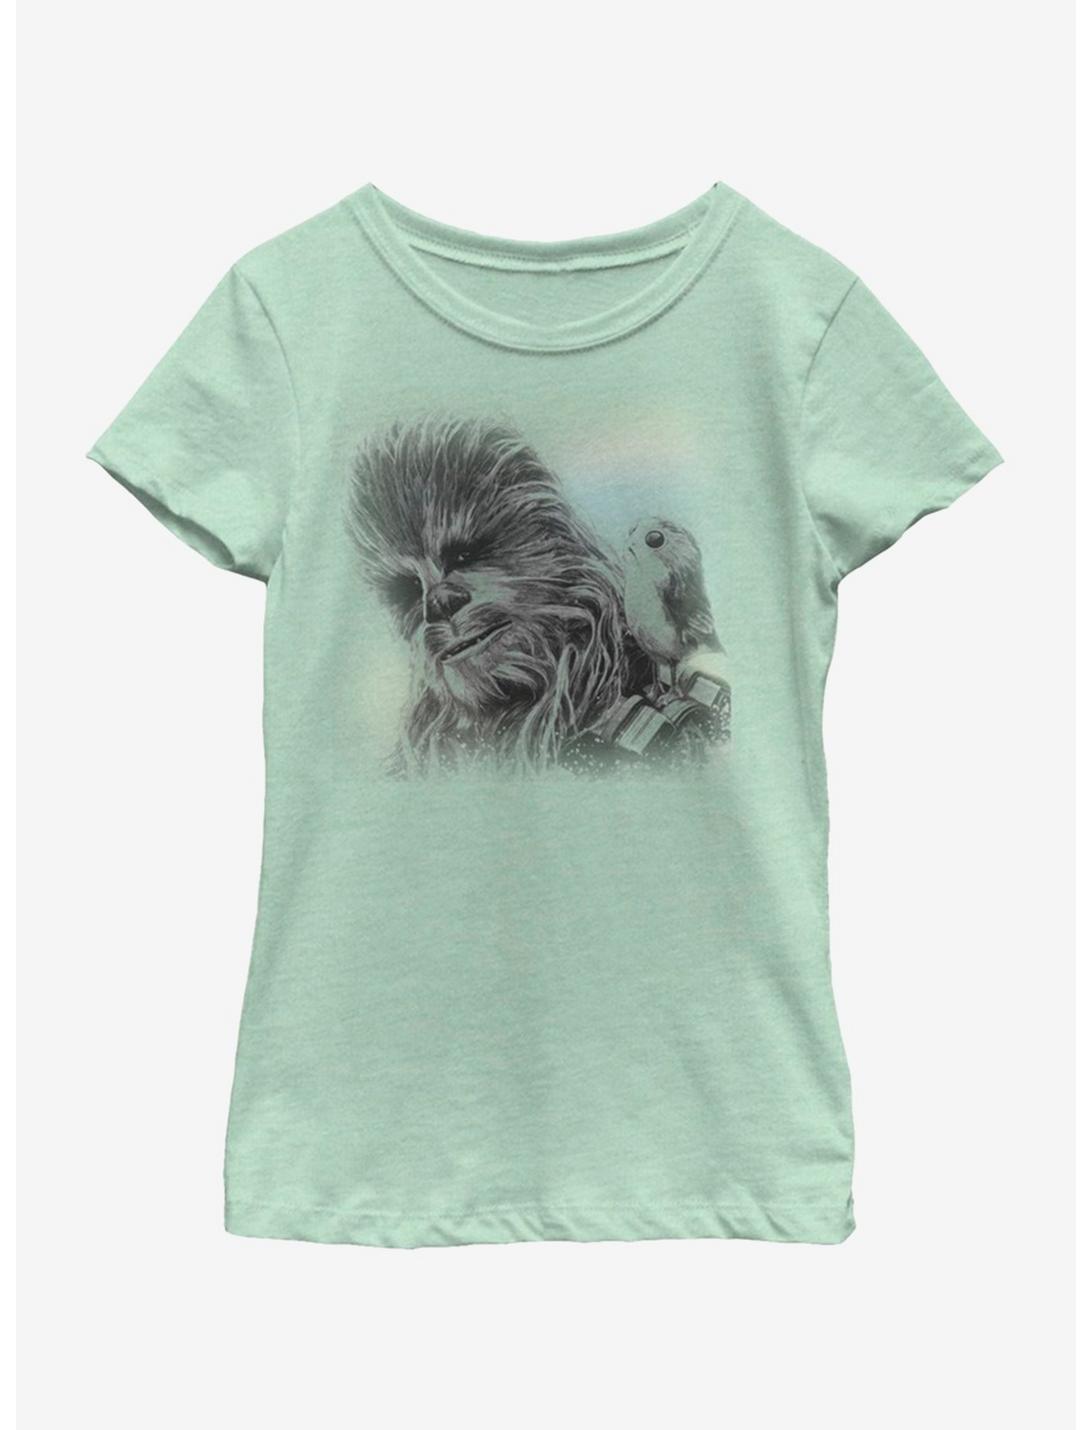 Star Wars The Last Jedi Chewie Porg Youth Girls T-Shirt, MINT, hi-res